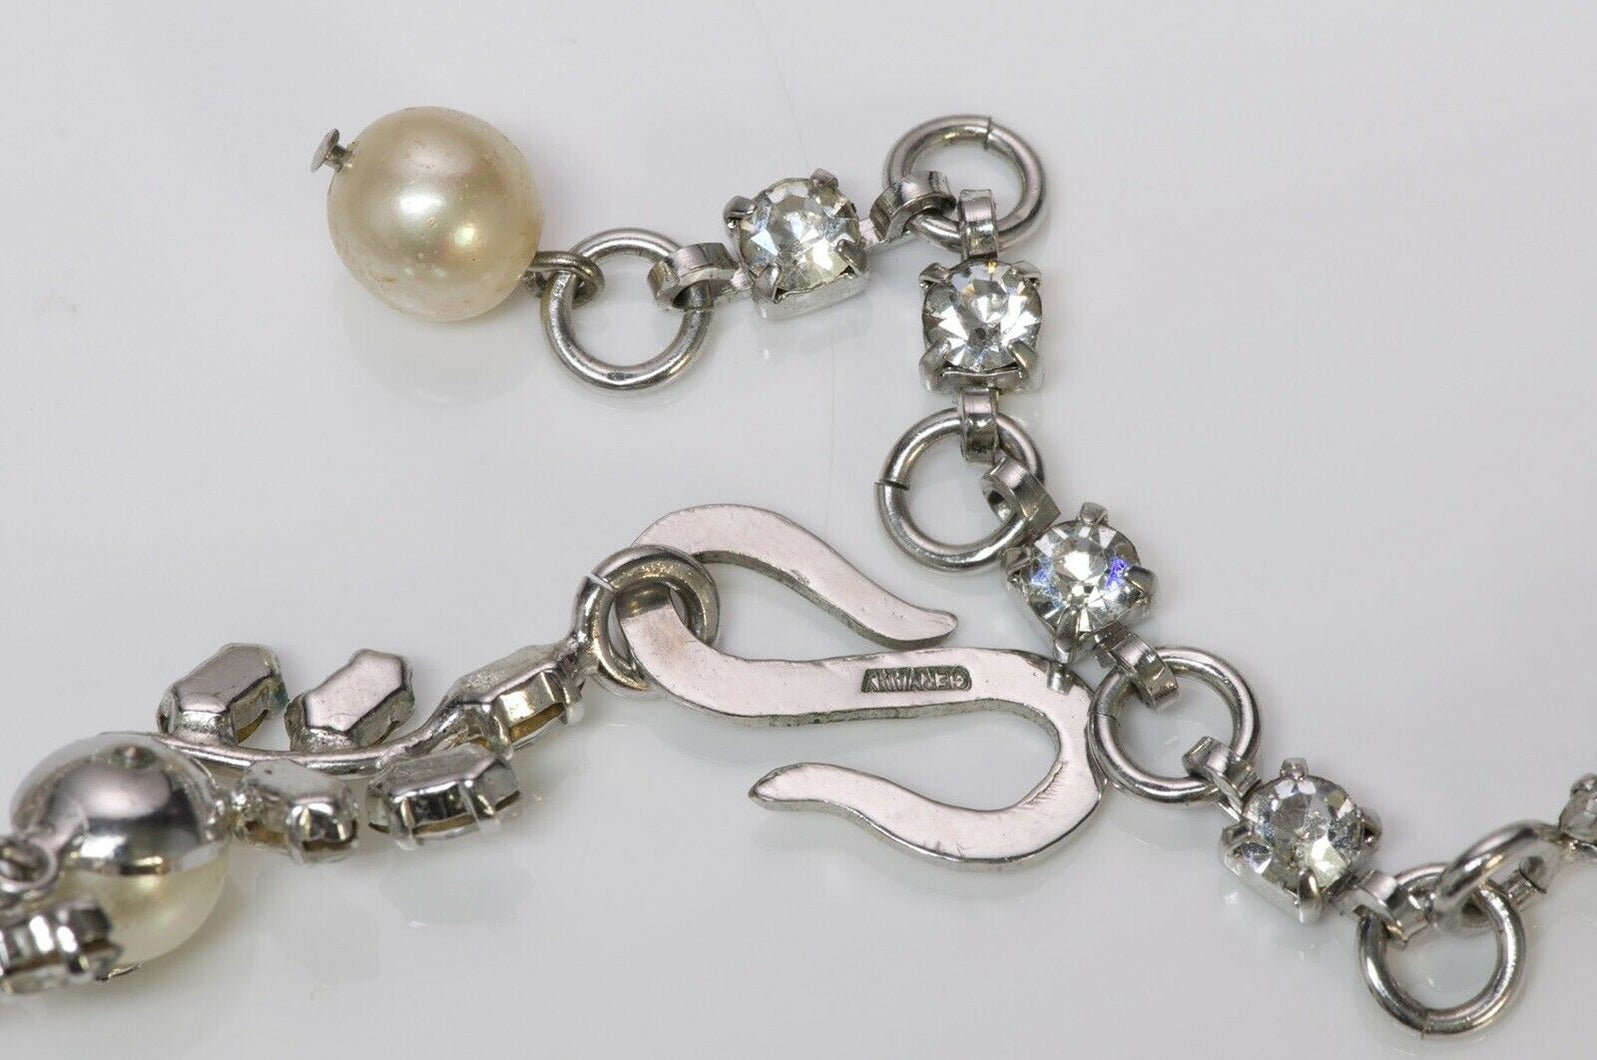 Christian Dior Henkel & Grosse 1959 Crystal Pearl Necklace